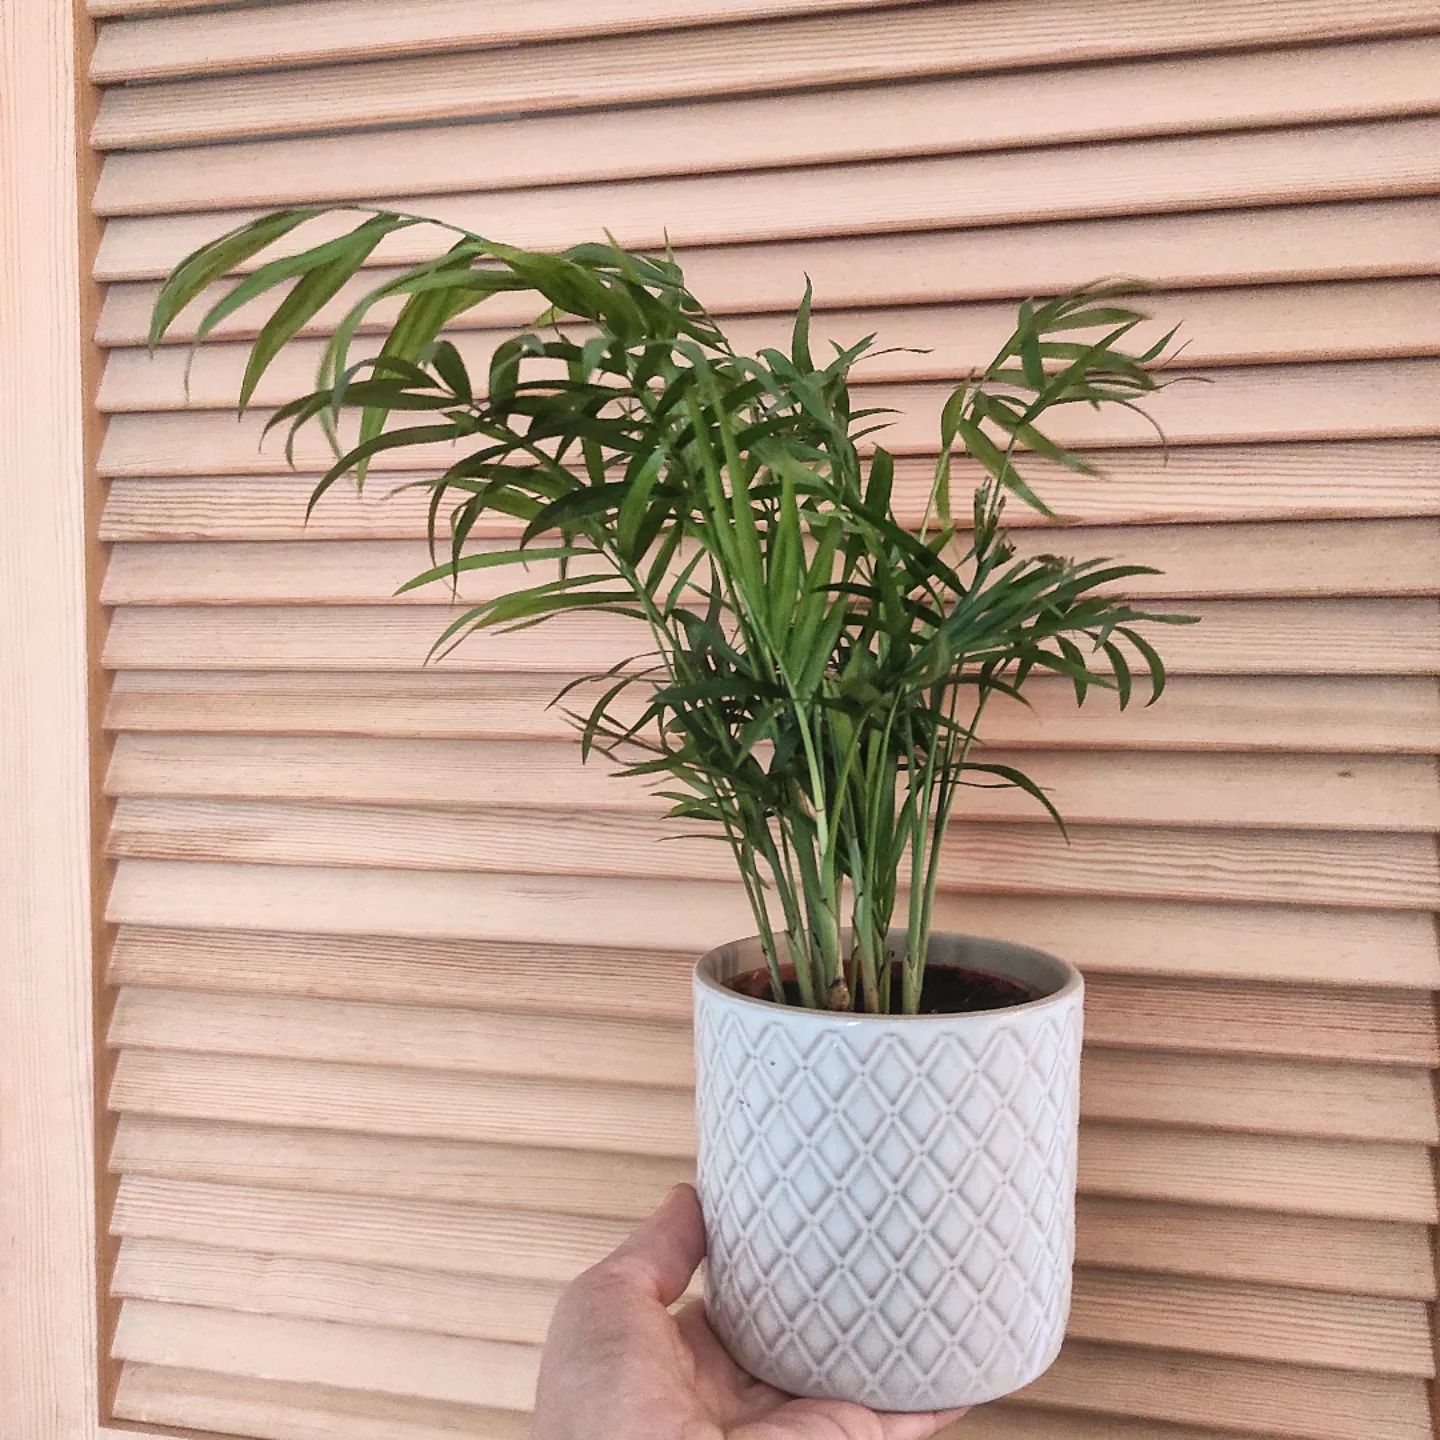 Parlor Palm (Chamaedorea Elegans) - Air-purifying plants for 2022 on Thursd